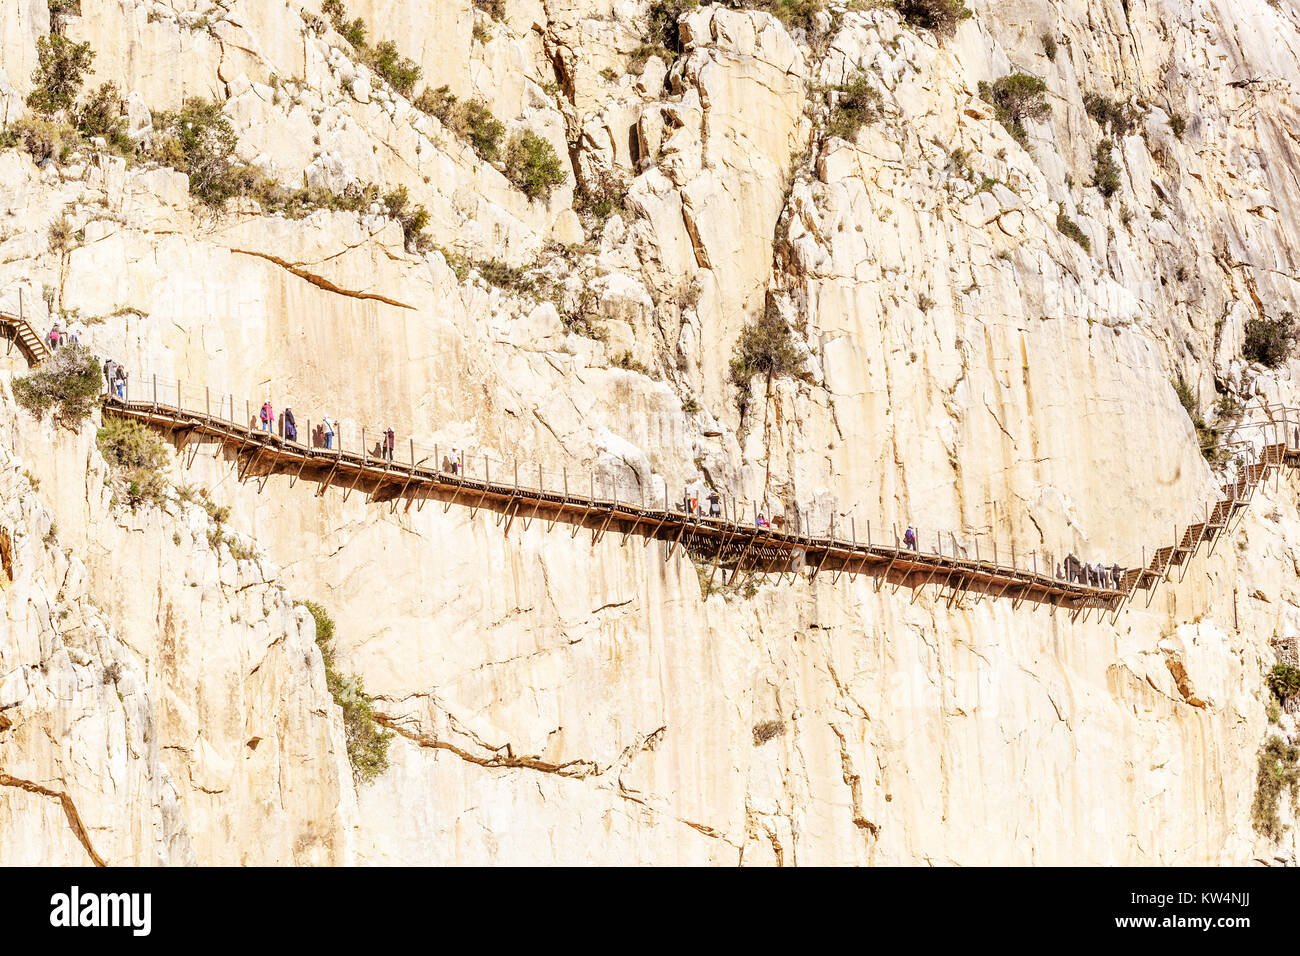 El Caminito del Rey or King's little pathway. El Chorro. Andalucia, Spain Stock Photo